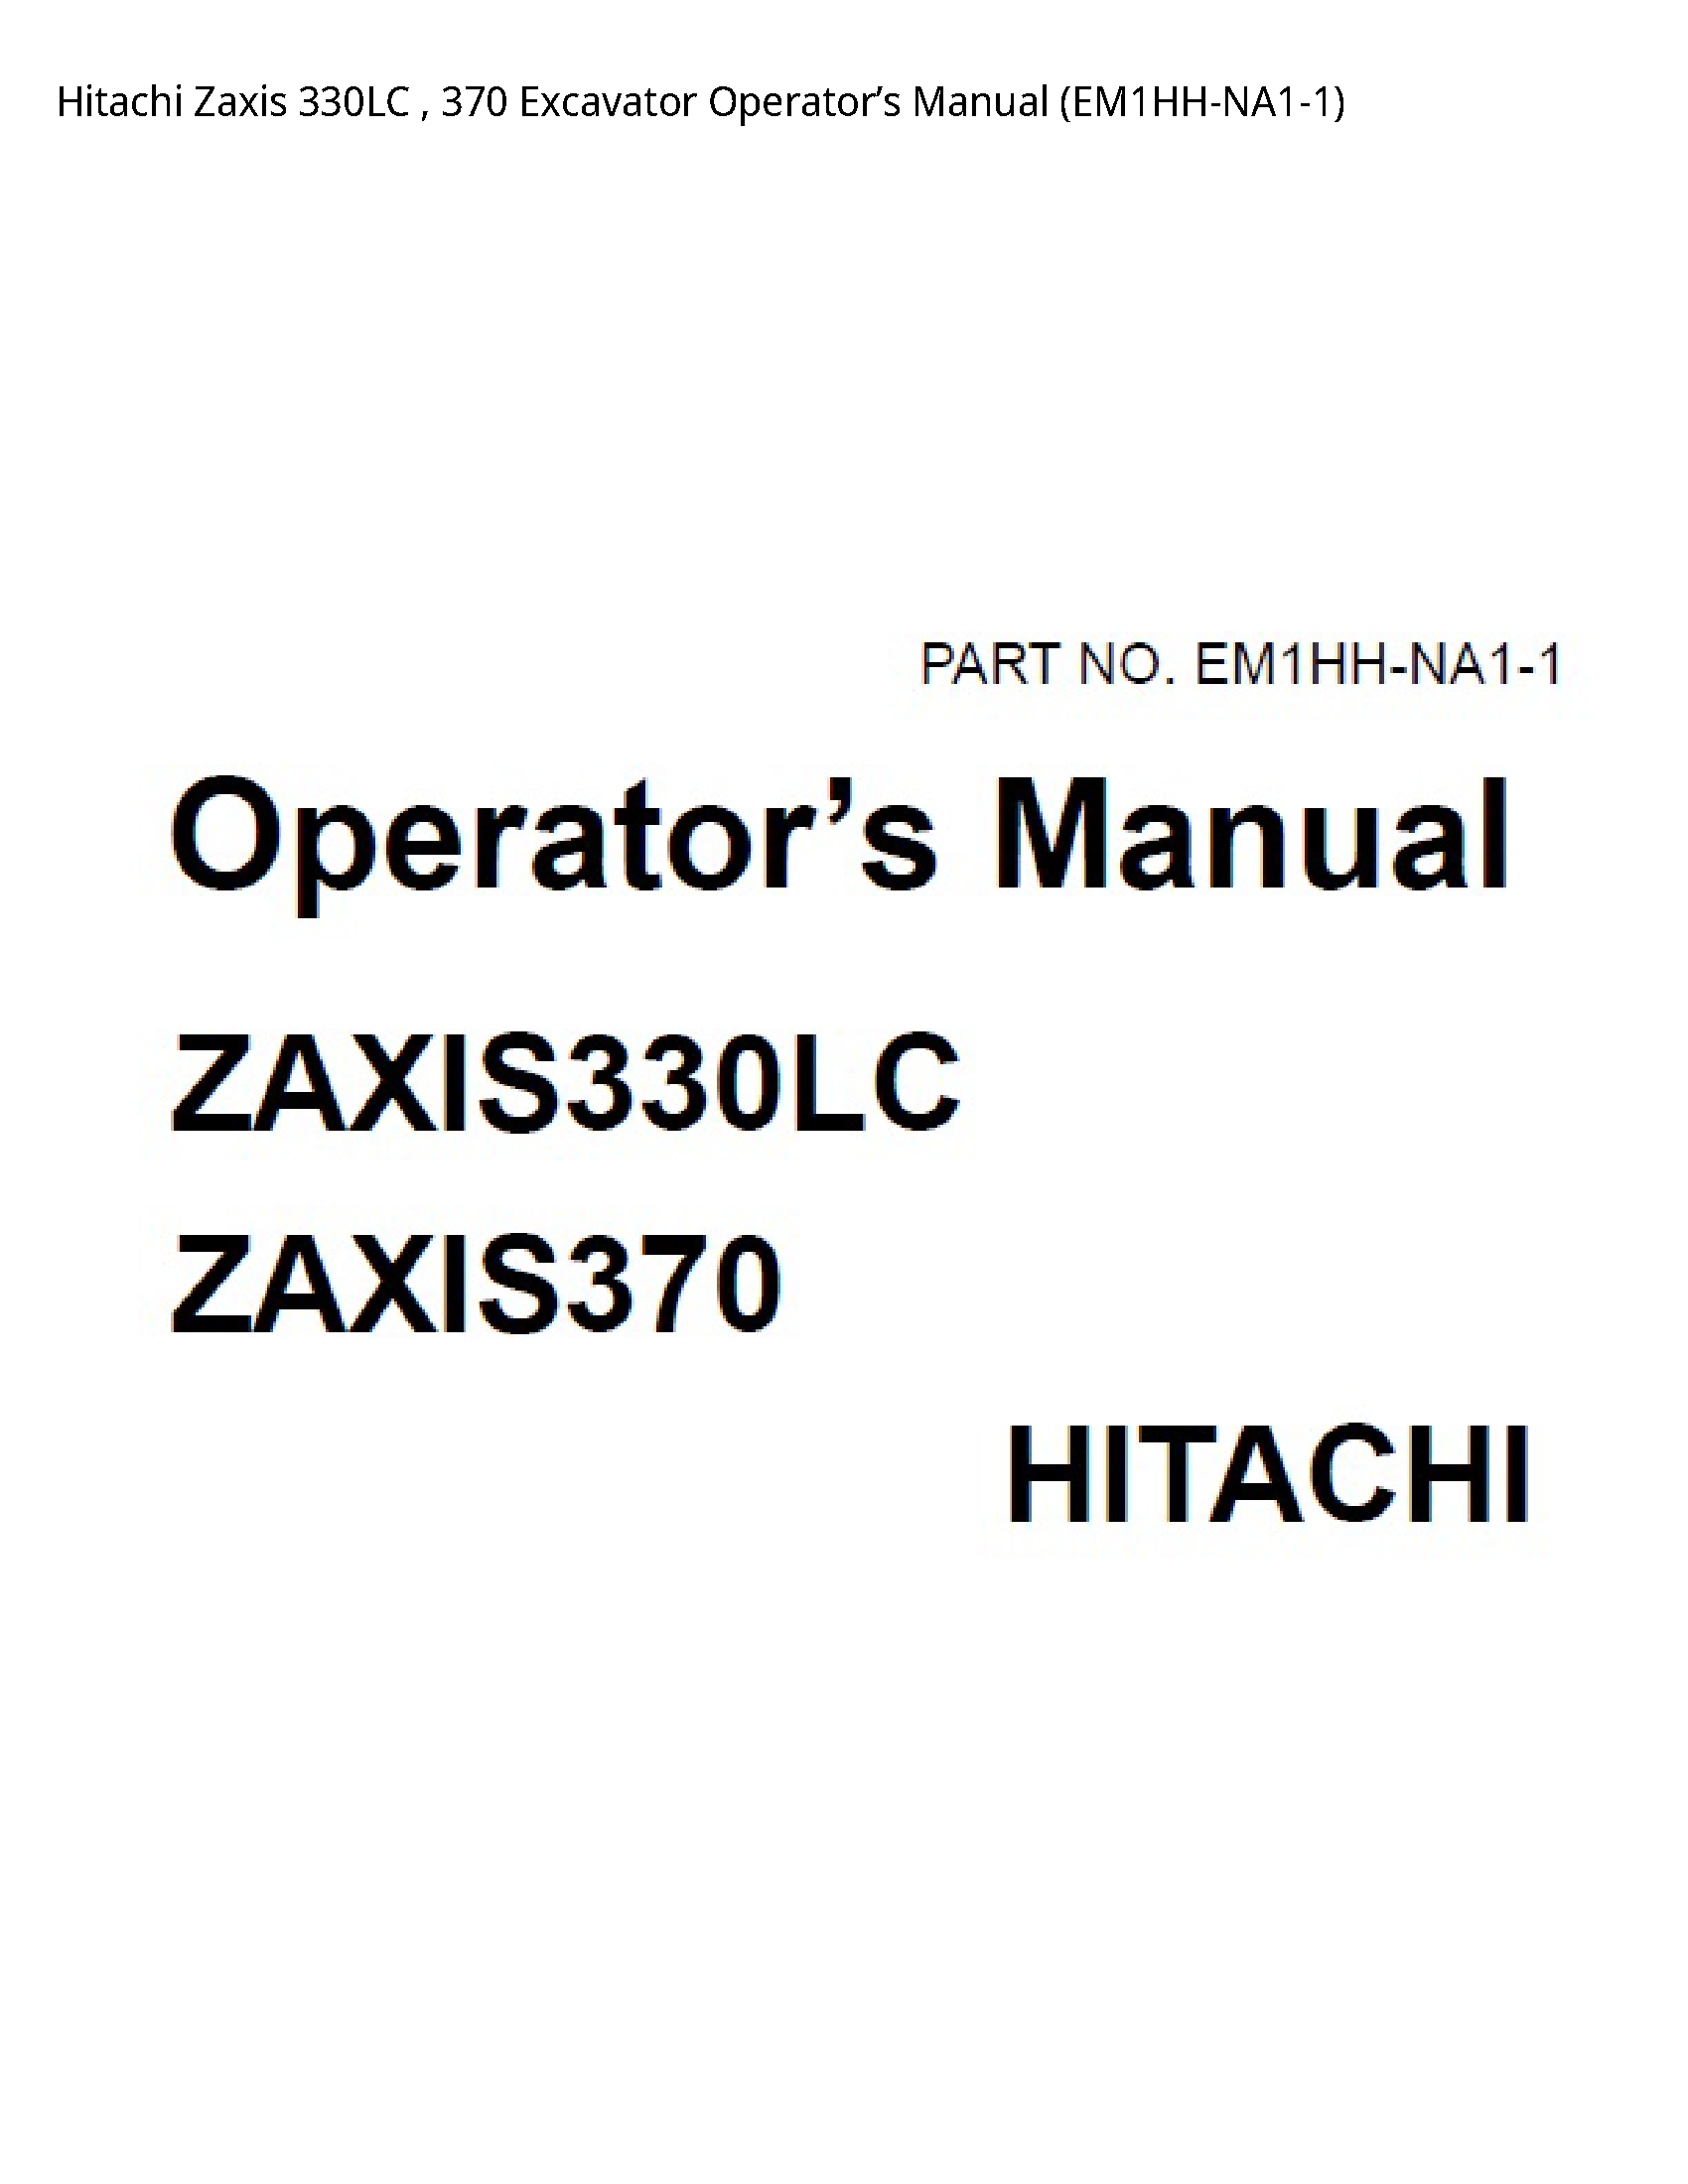 Hitachi 330LC Zaxis Excavator Operator’s manual